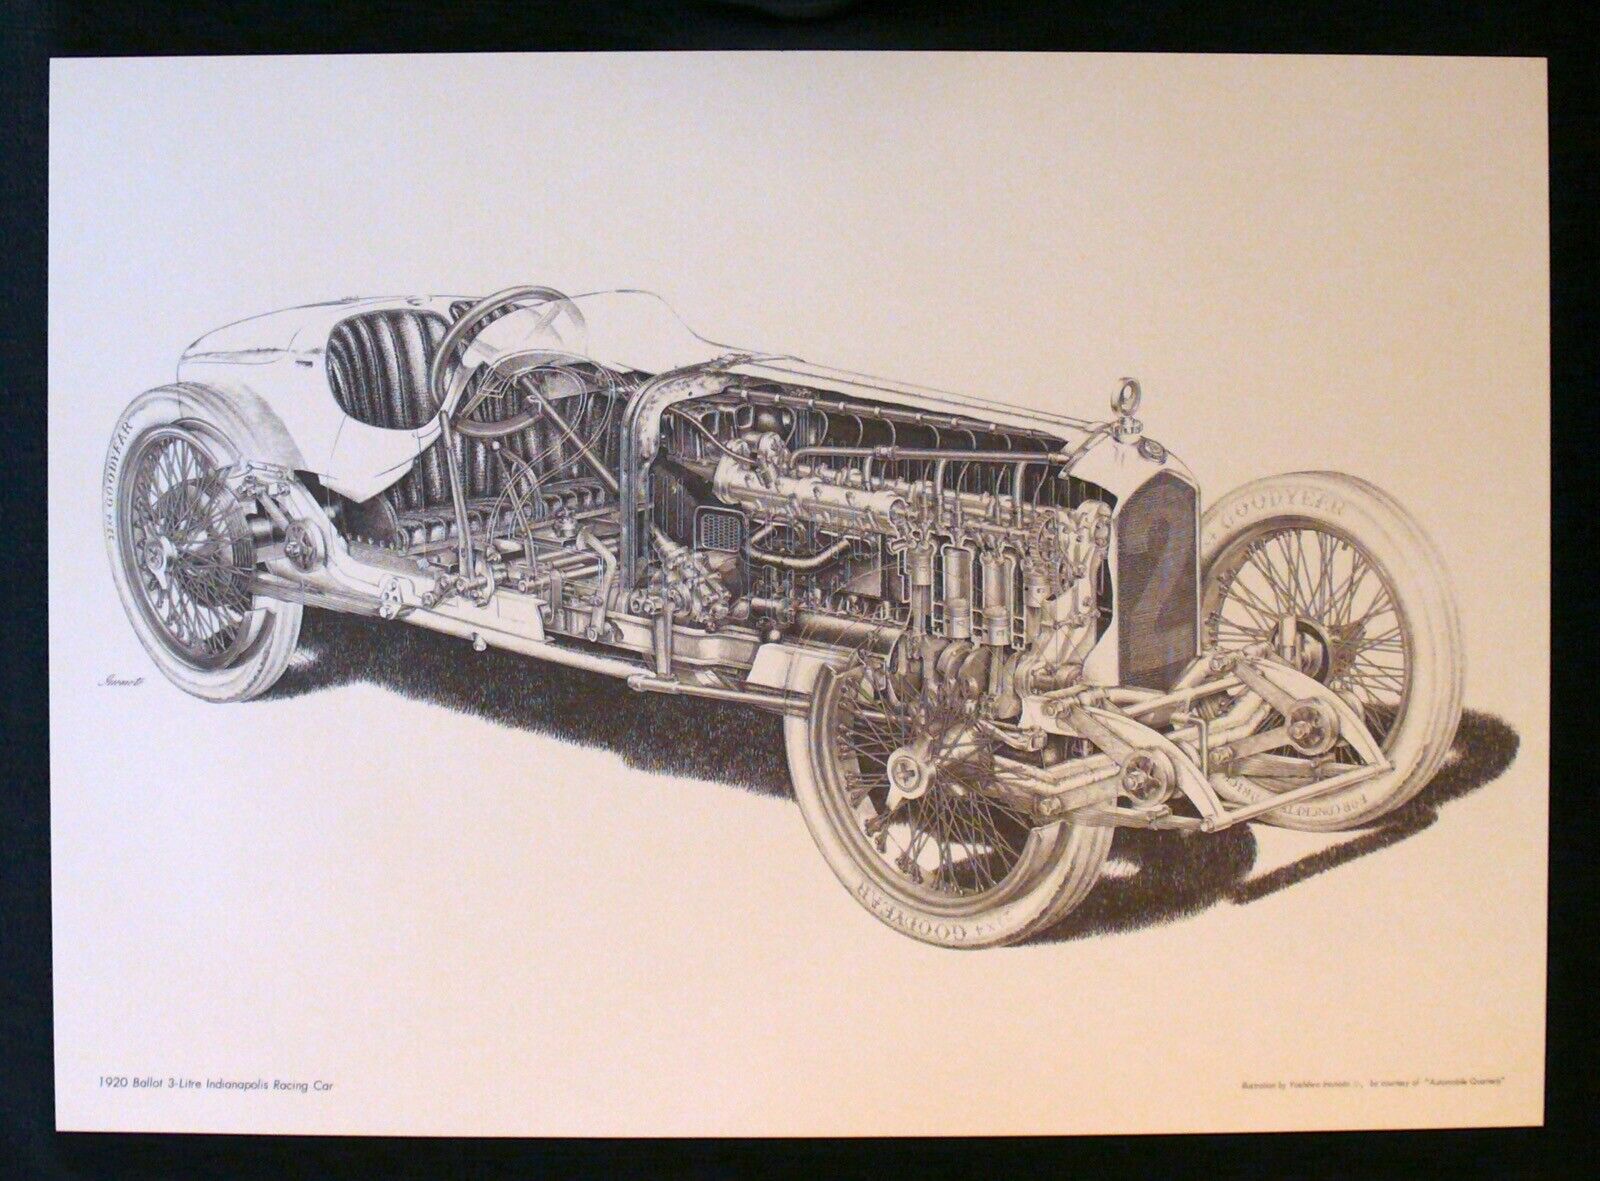 Yoshihiro Inomoto 1920 Ballot 3-Litre Indianapolis Racing Car Cutaway Print